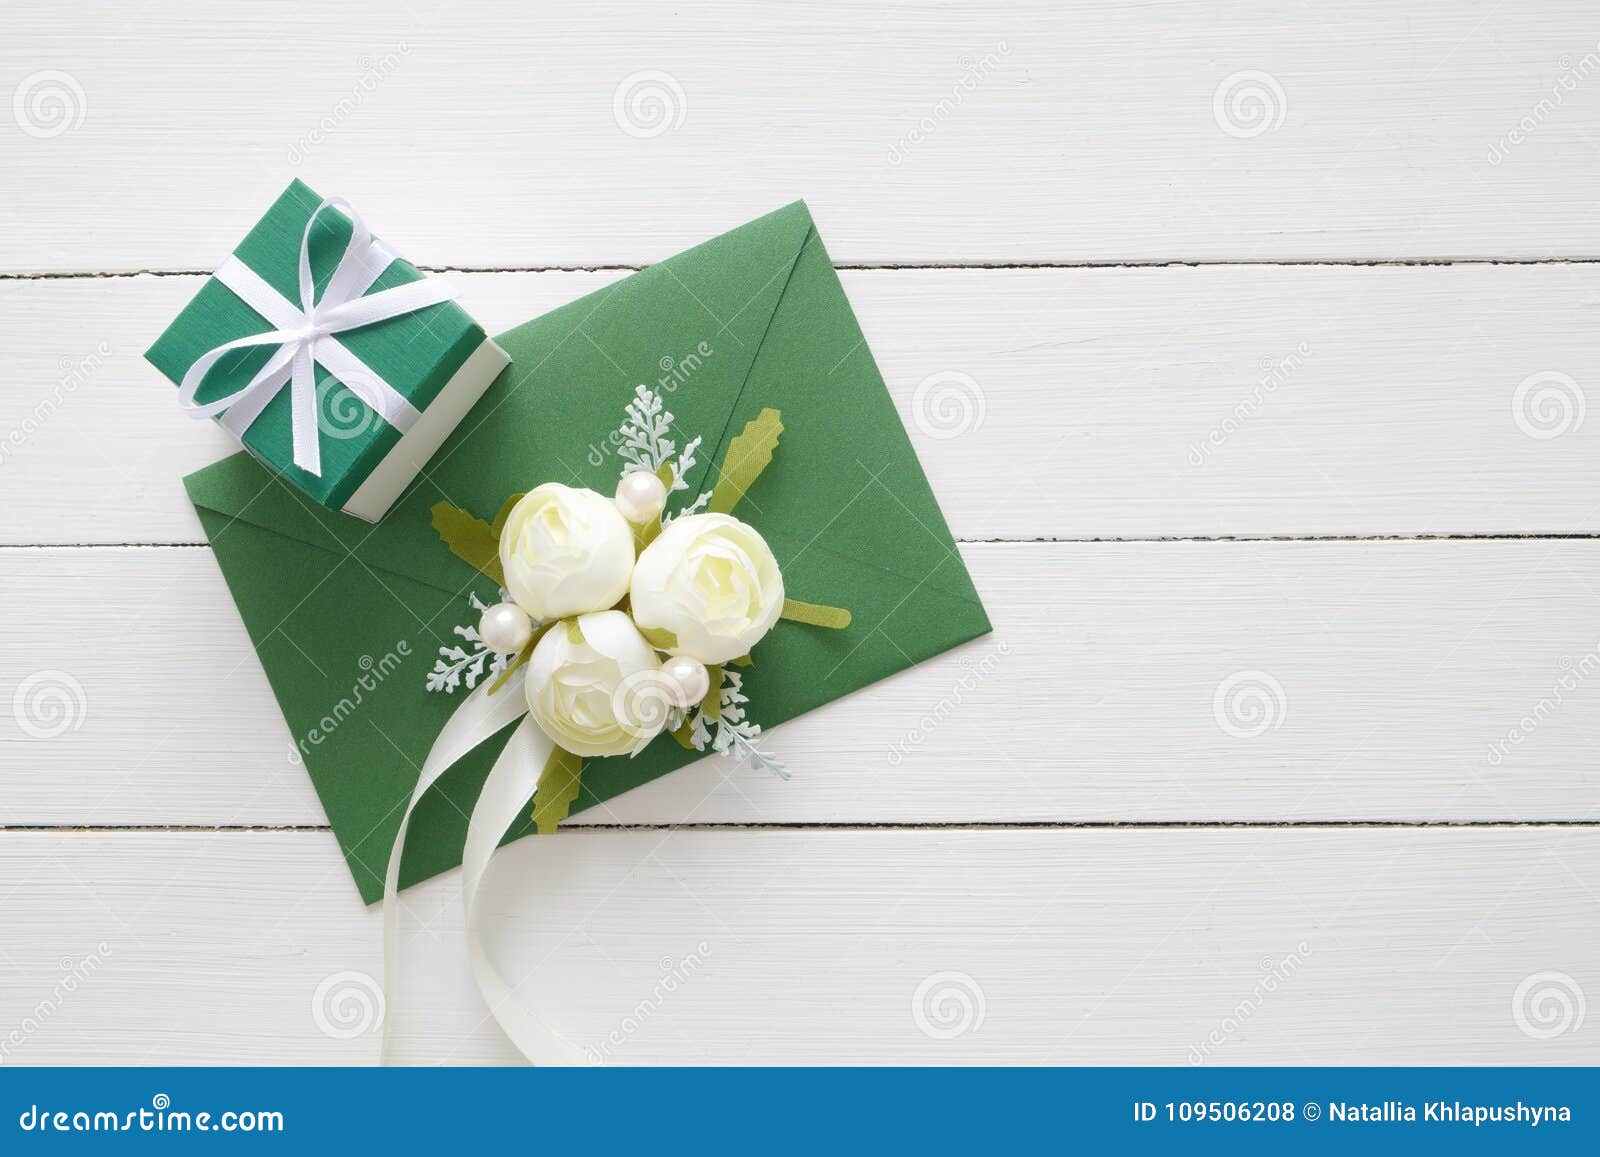 20 Unique Gift Ideas To Send With Invitation Cards This Wedding Season |  WeddingBazaar